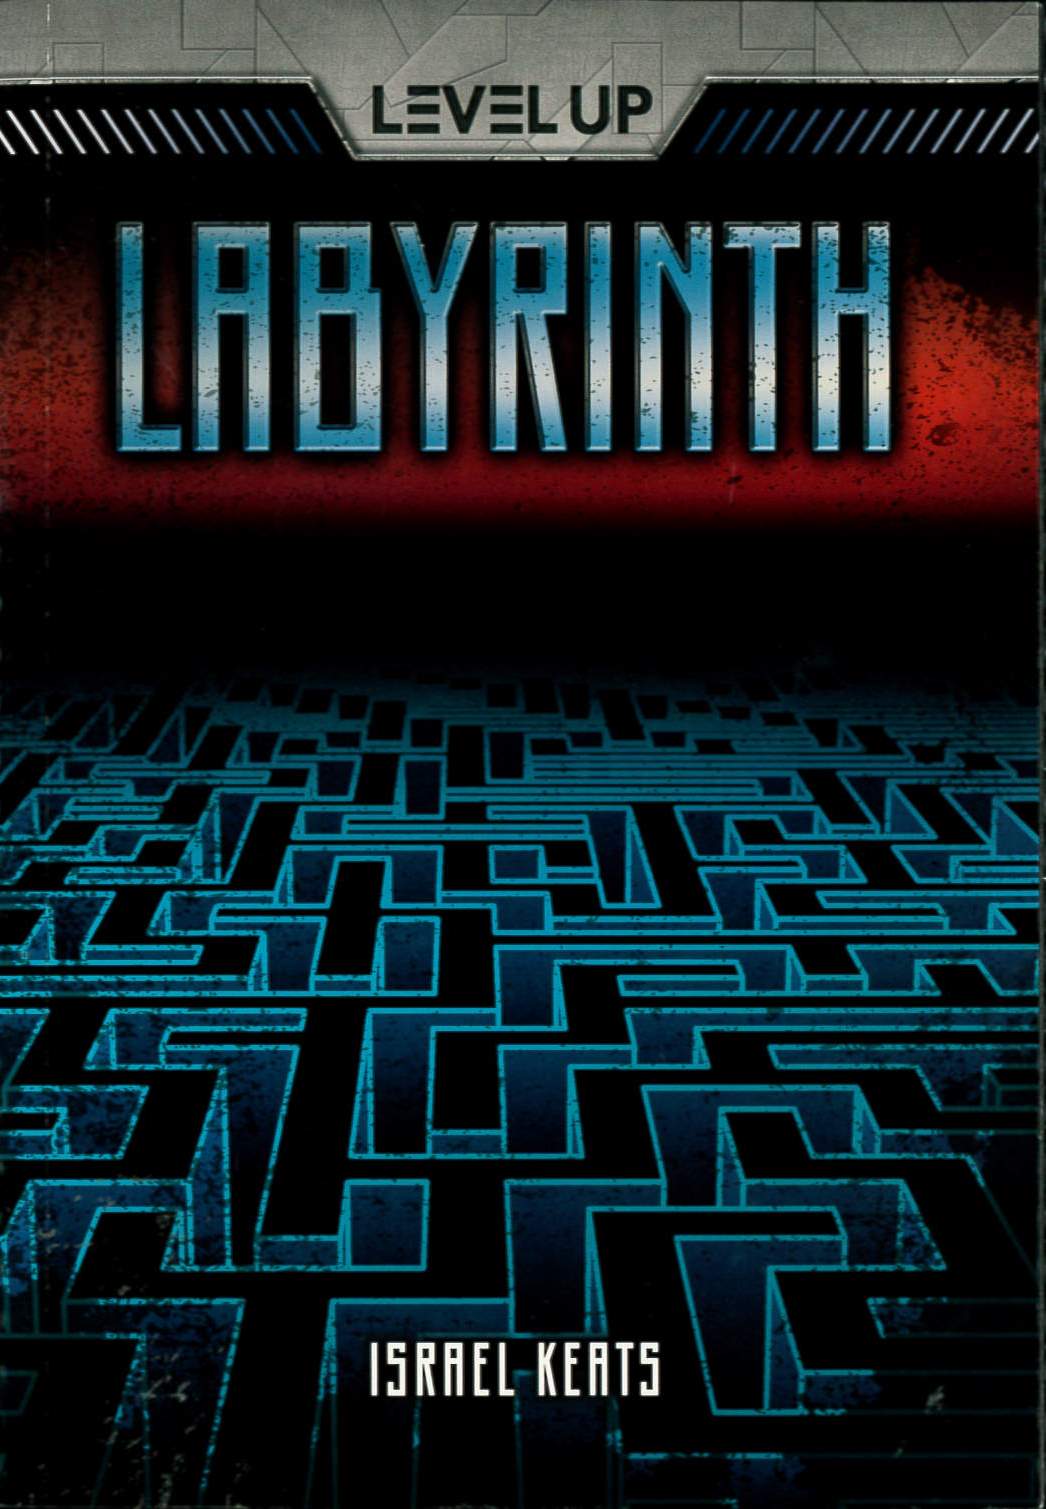 Labyrinth /